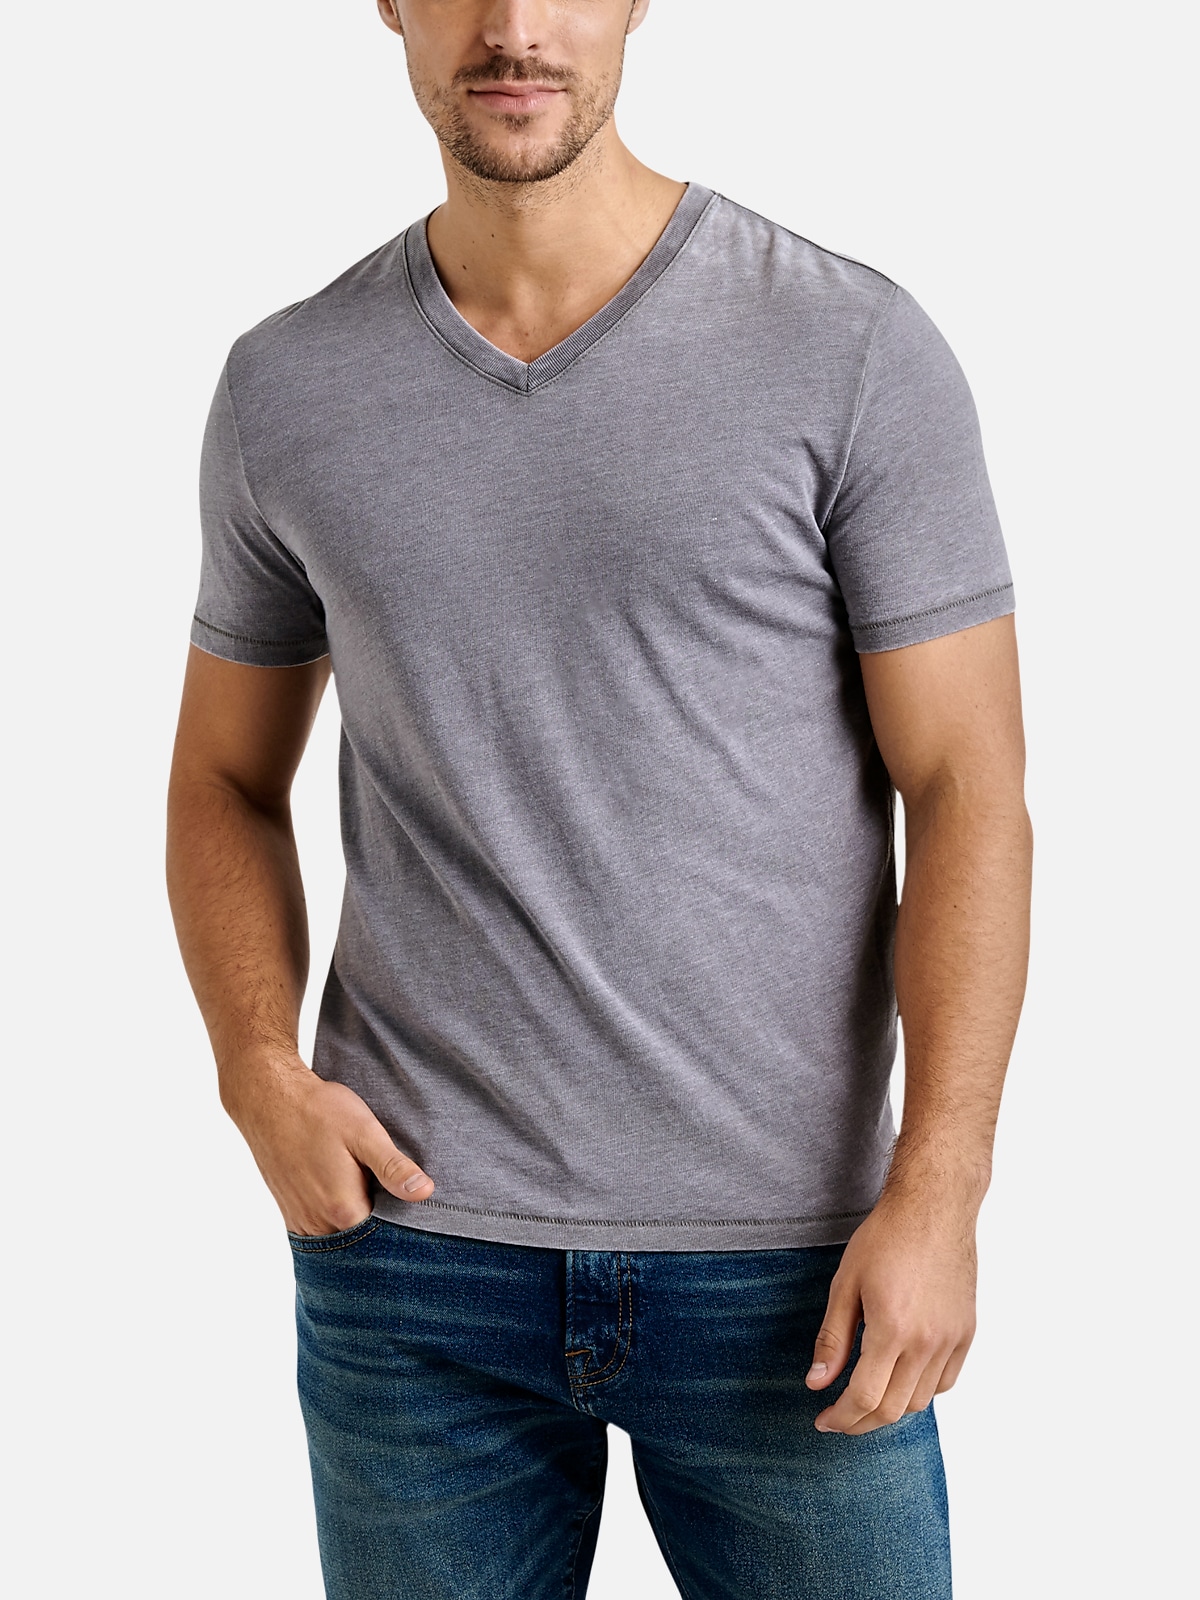 Men's Lightweight Burnout Yoga Tee Shirt - Gray